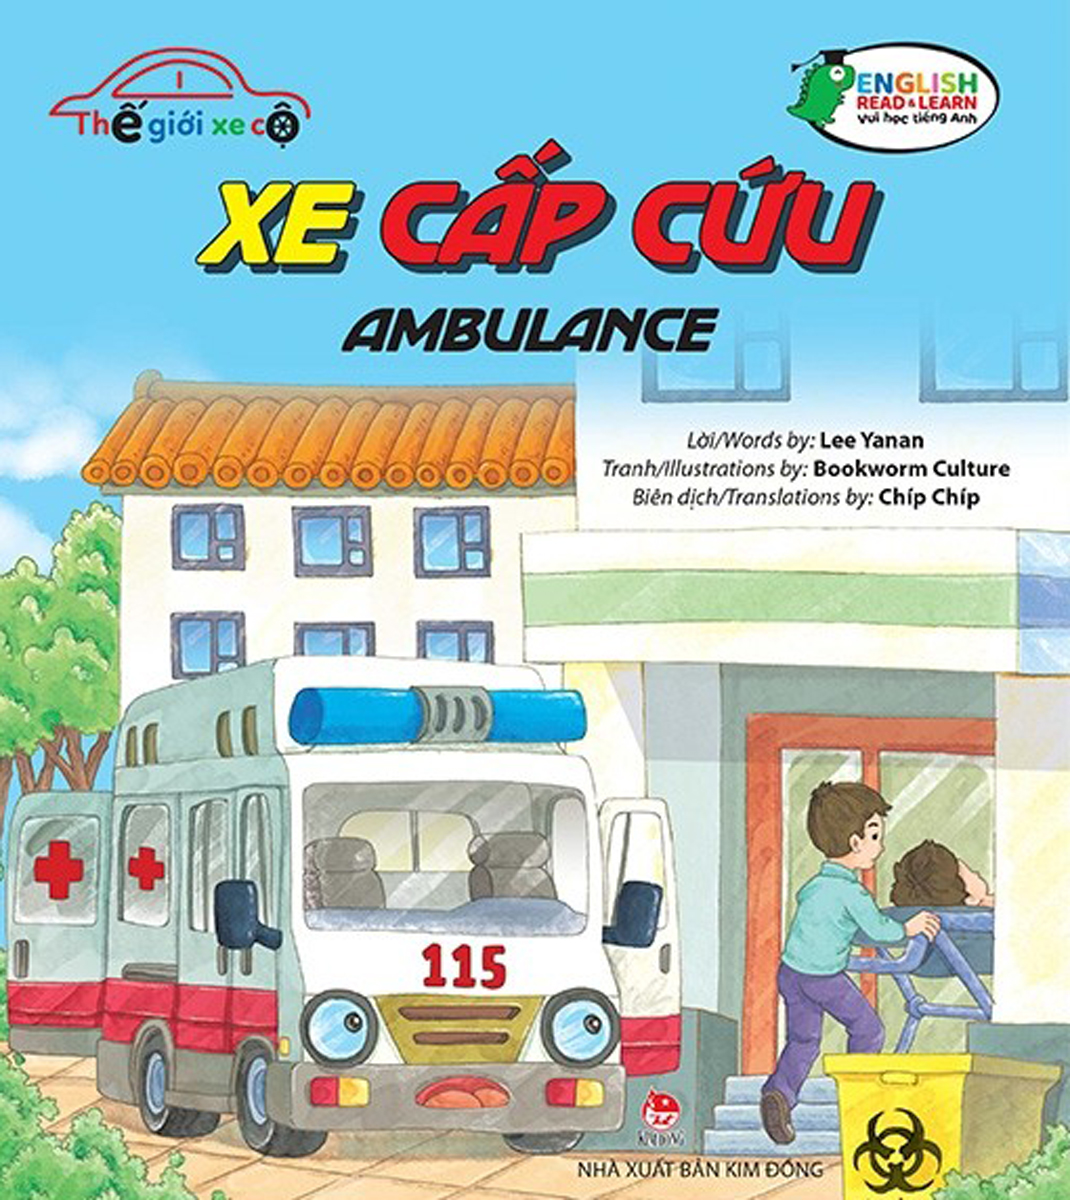 Thế Giới Xe Cộ - Xe Cấp Cứu - Ambulance